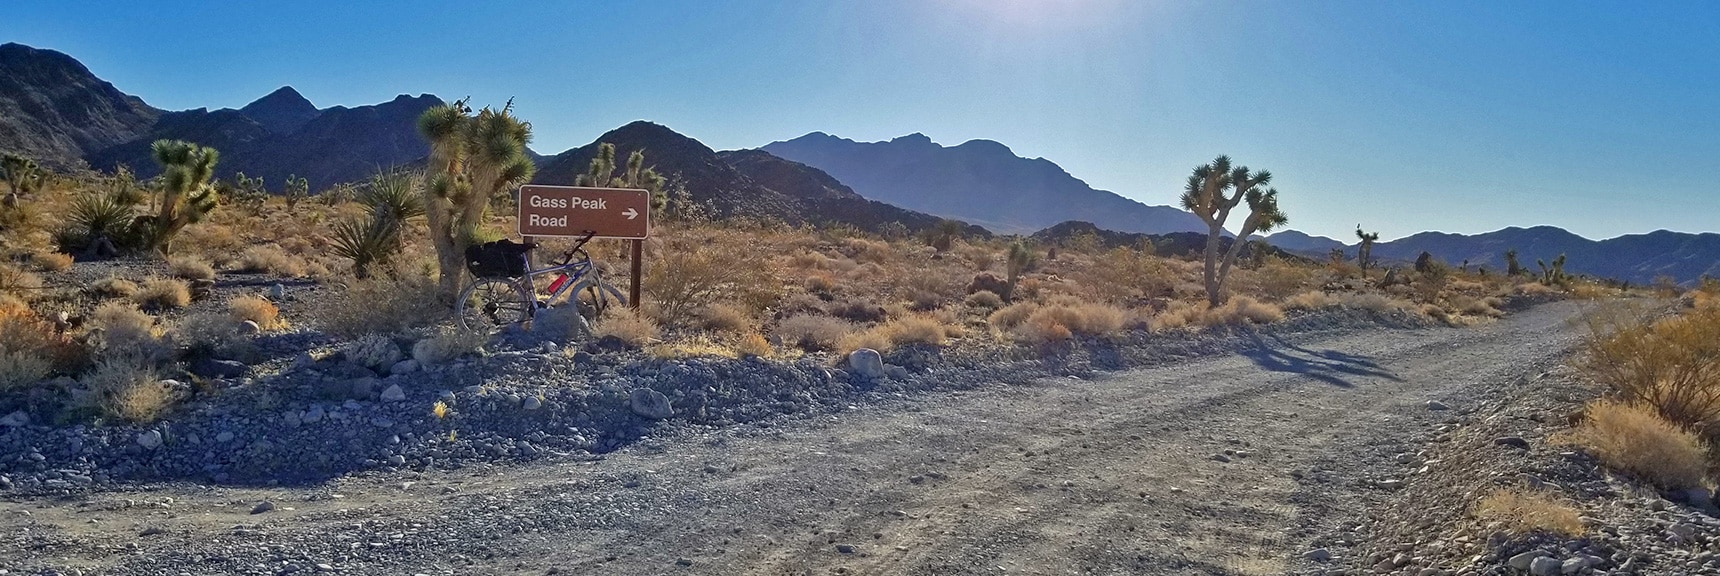 View Down Gass Peak Road, Gass Peak in Background | Lower Mormon Well Road | Sheep Range, Desert National Wildlife Refuge, Nevada